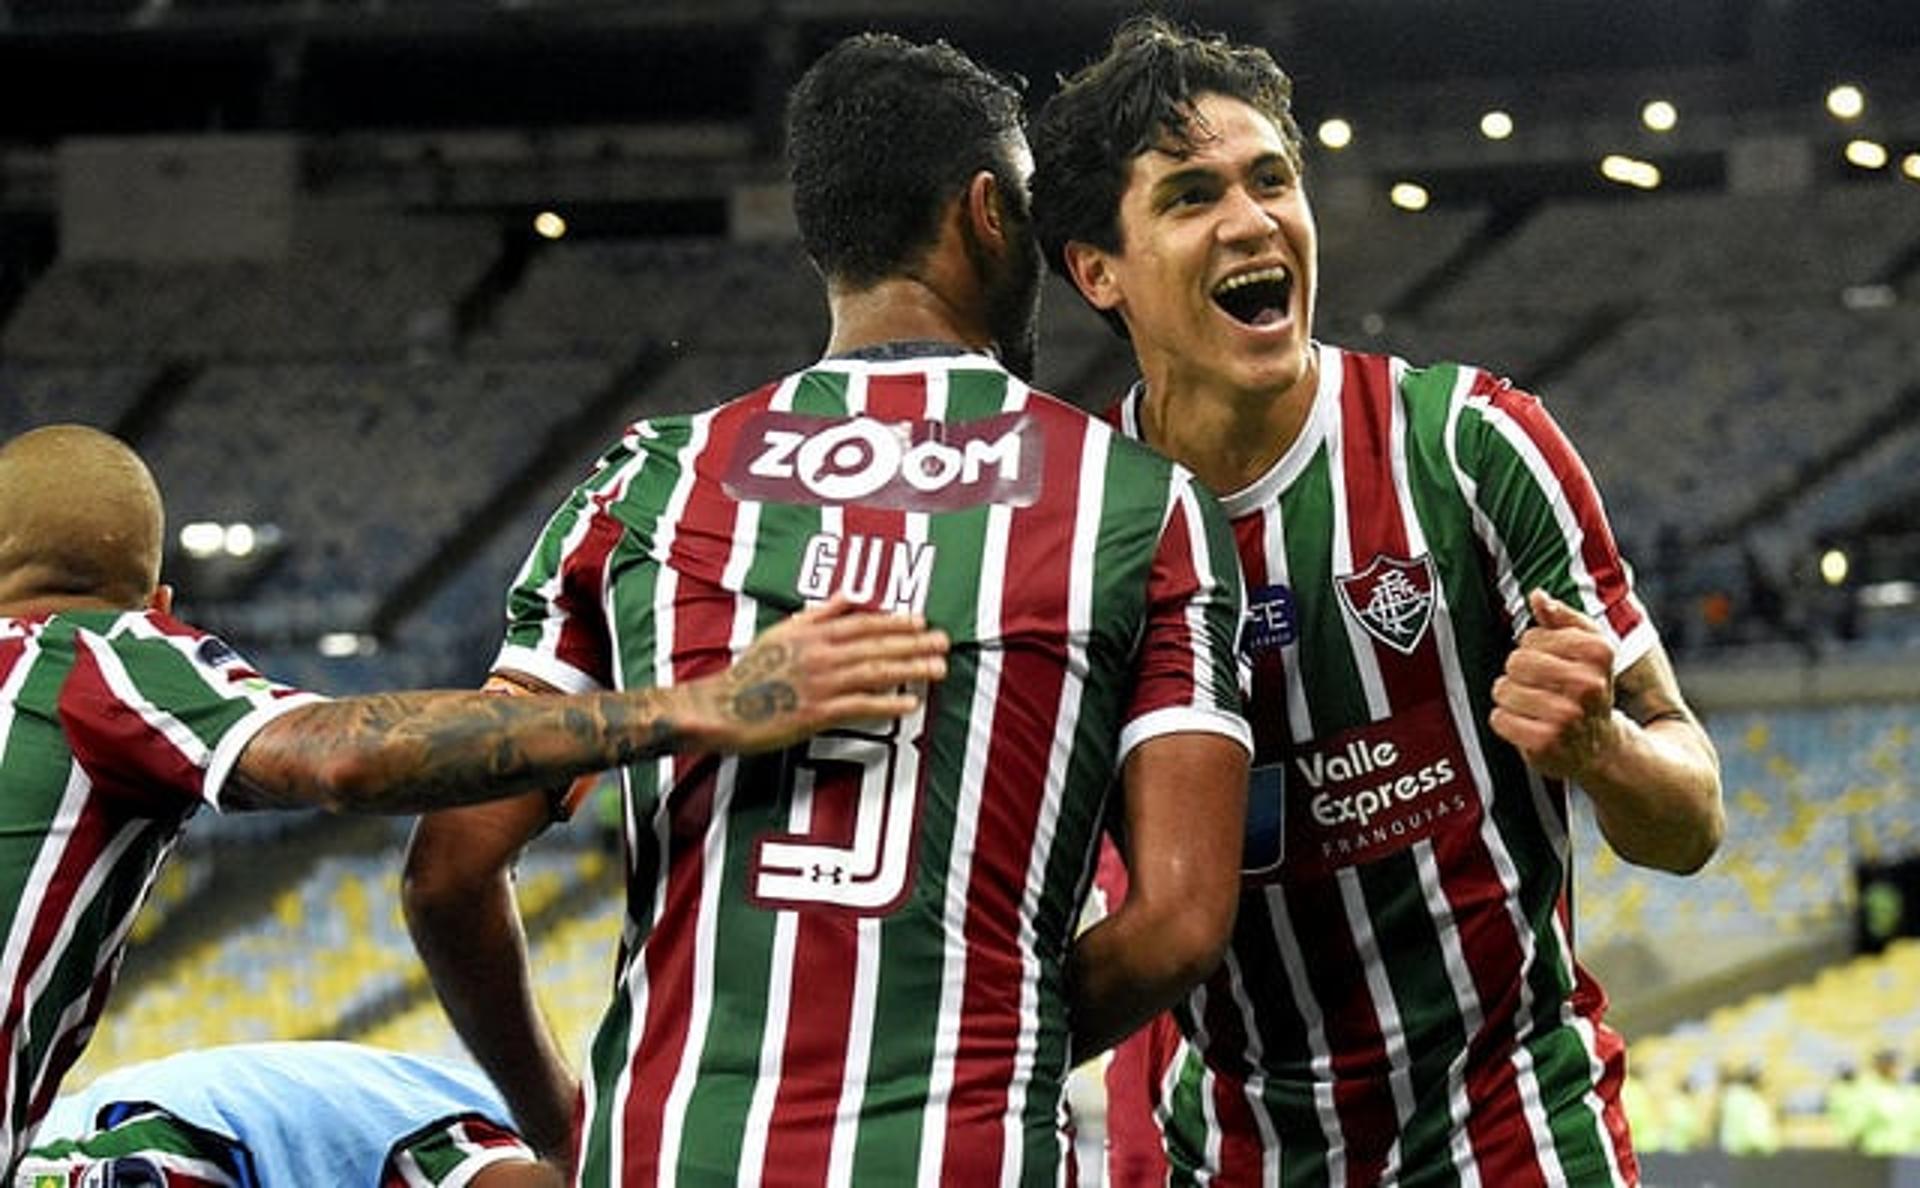 Pedro - Fluminense x Defensor